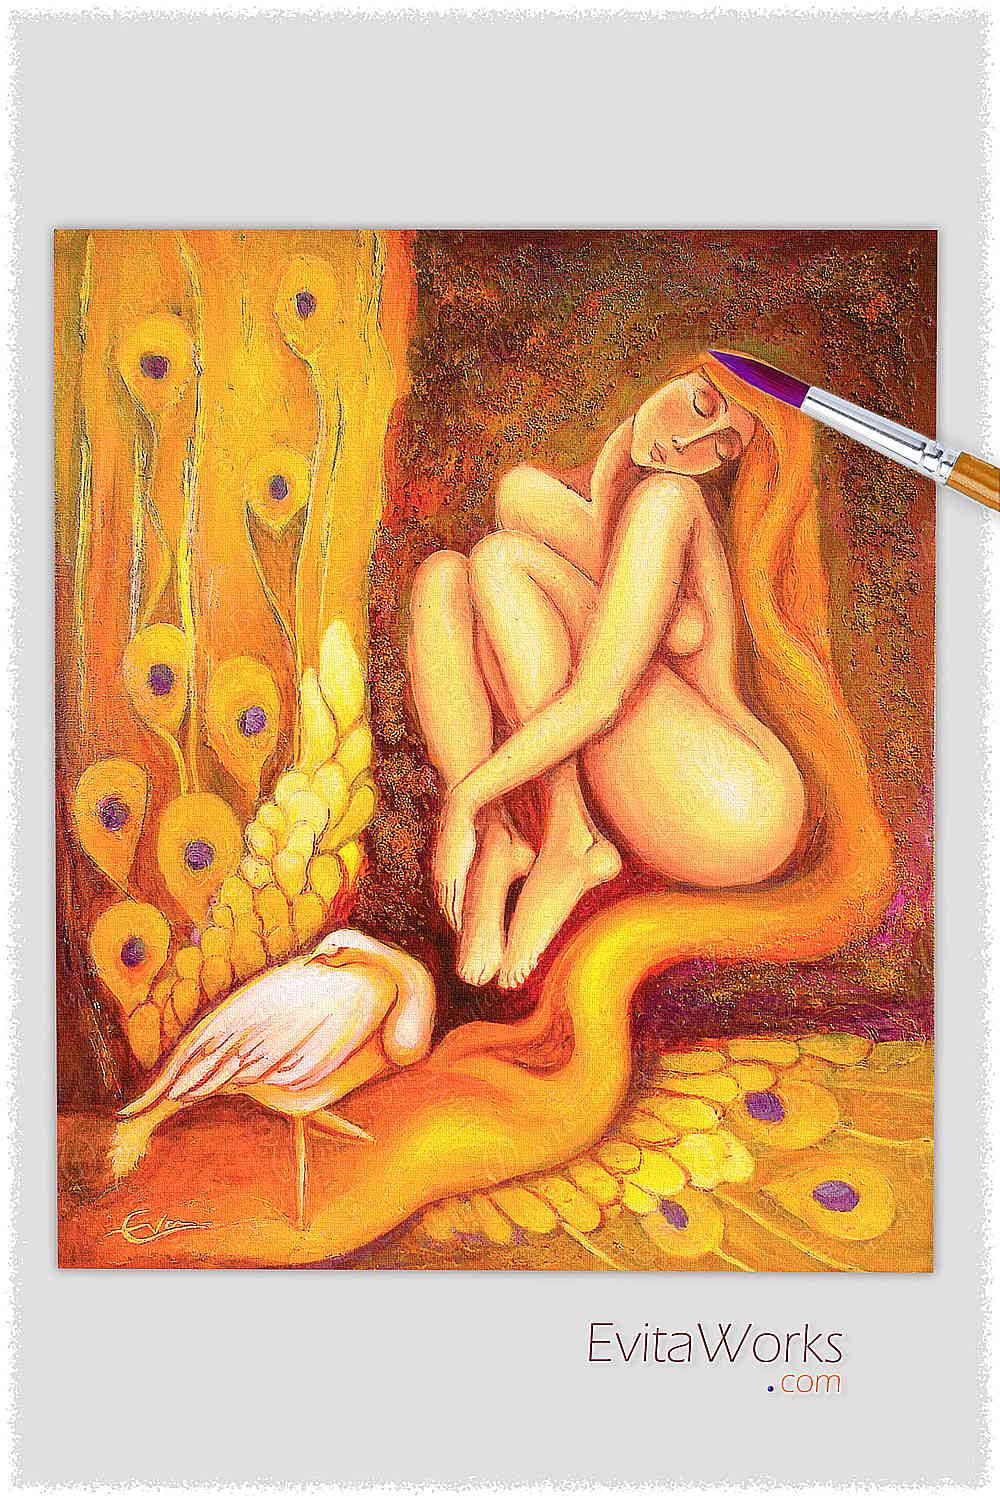 ea flamingo dream ~ EvitaWorks